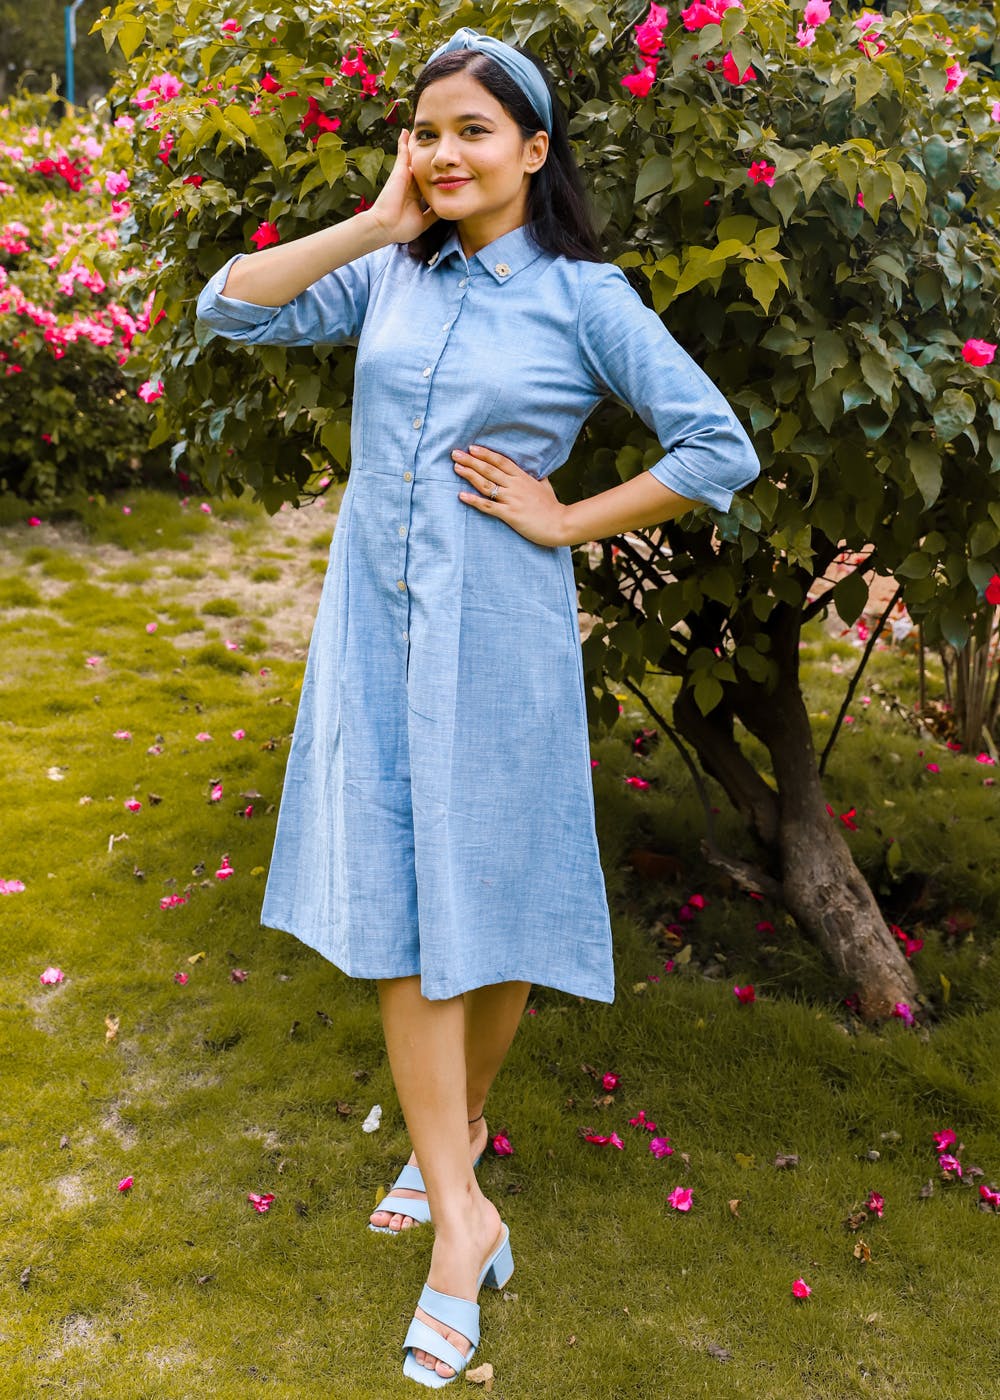 Sobhita Dhulipala leaves fashion police smitten in blue sleeveless denim  dress | Fashion Trends - Hindustan Times